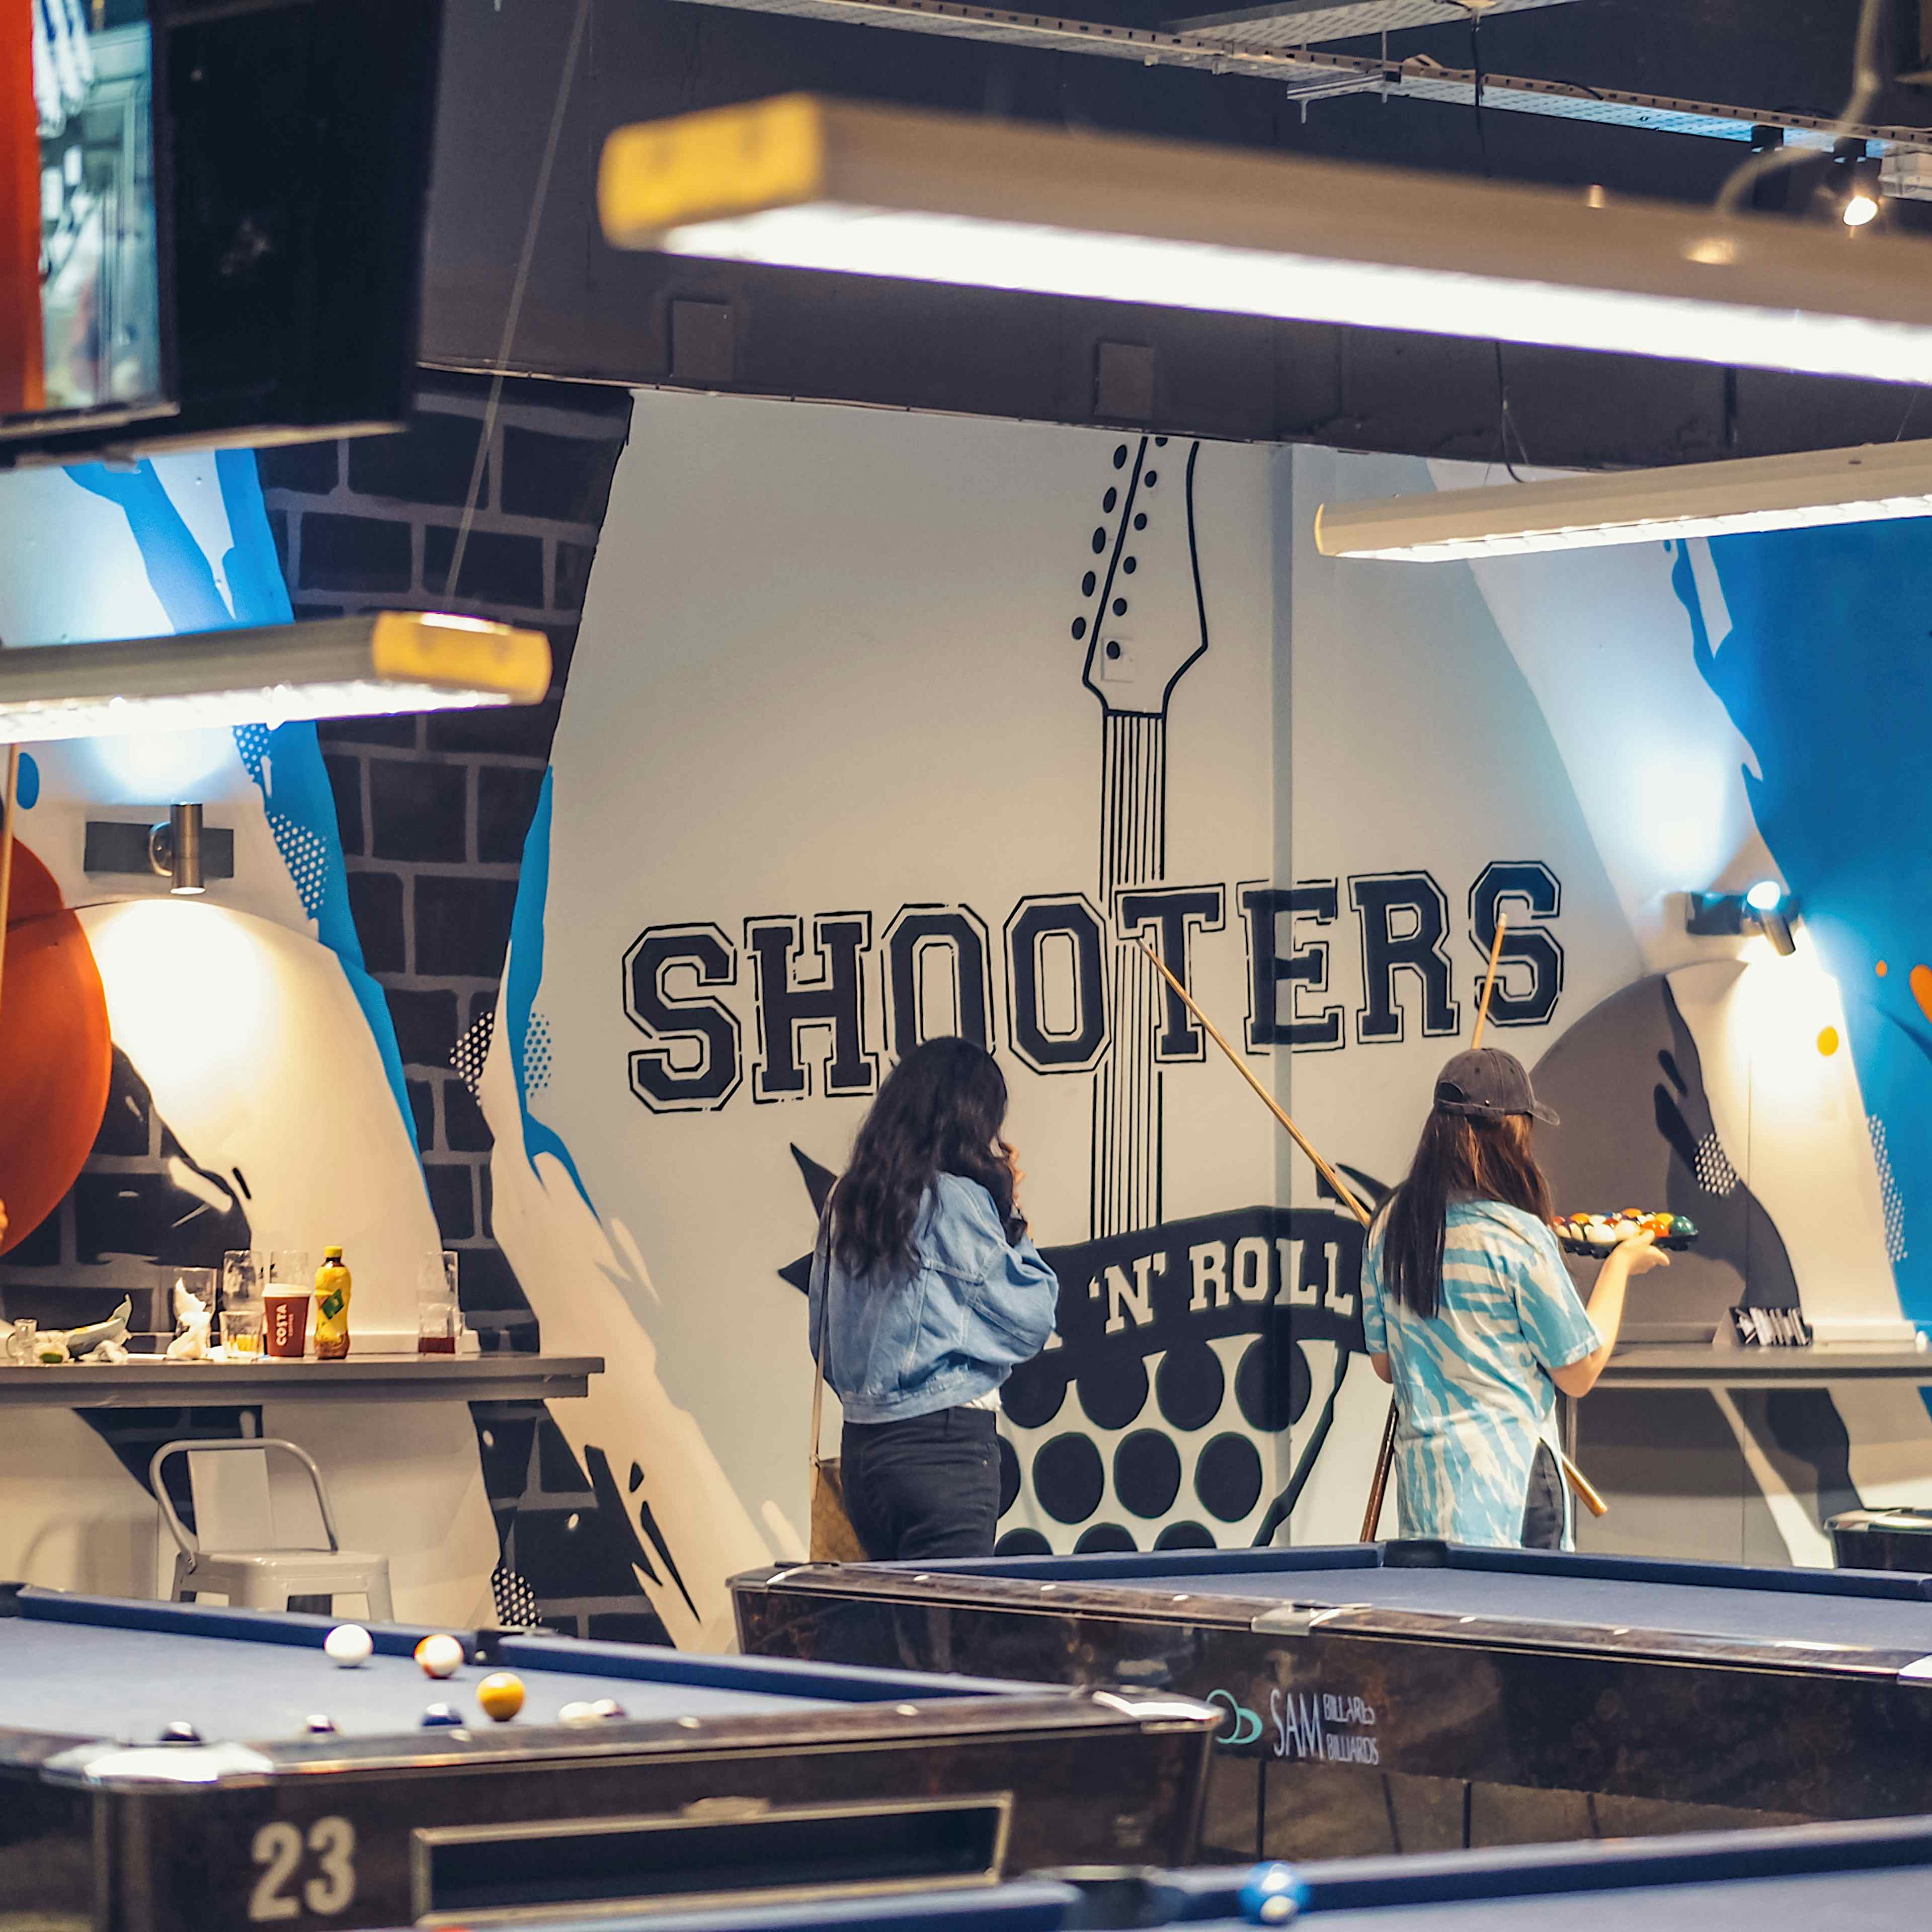 The Birmingham Bierkeller Entertainment Complex  - Shooters Sports Bar image 2